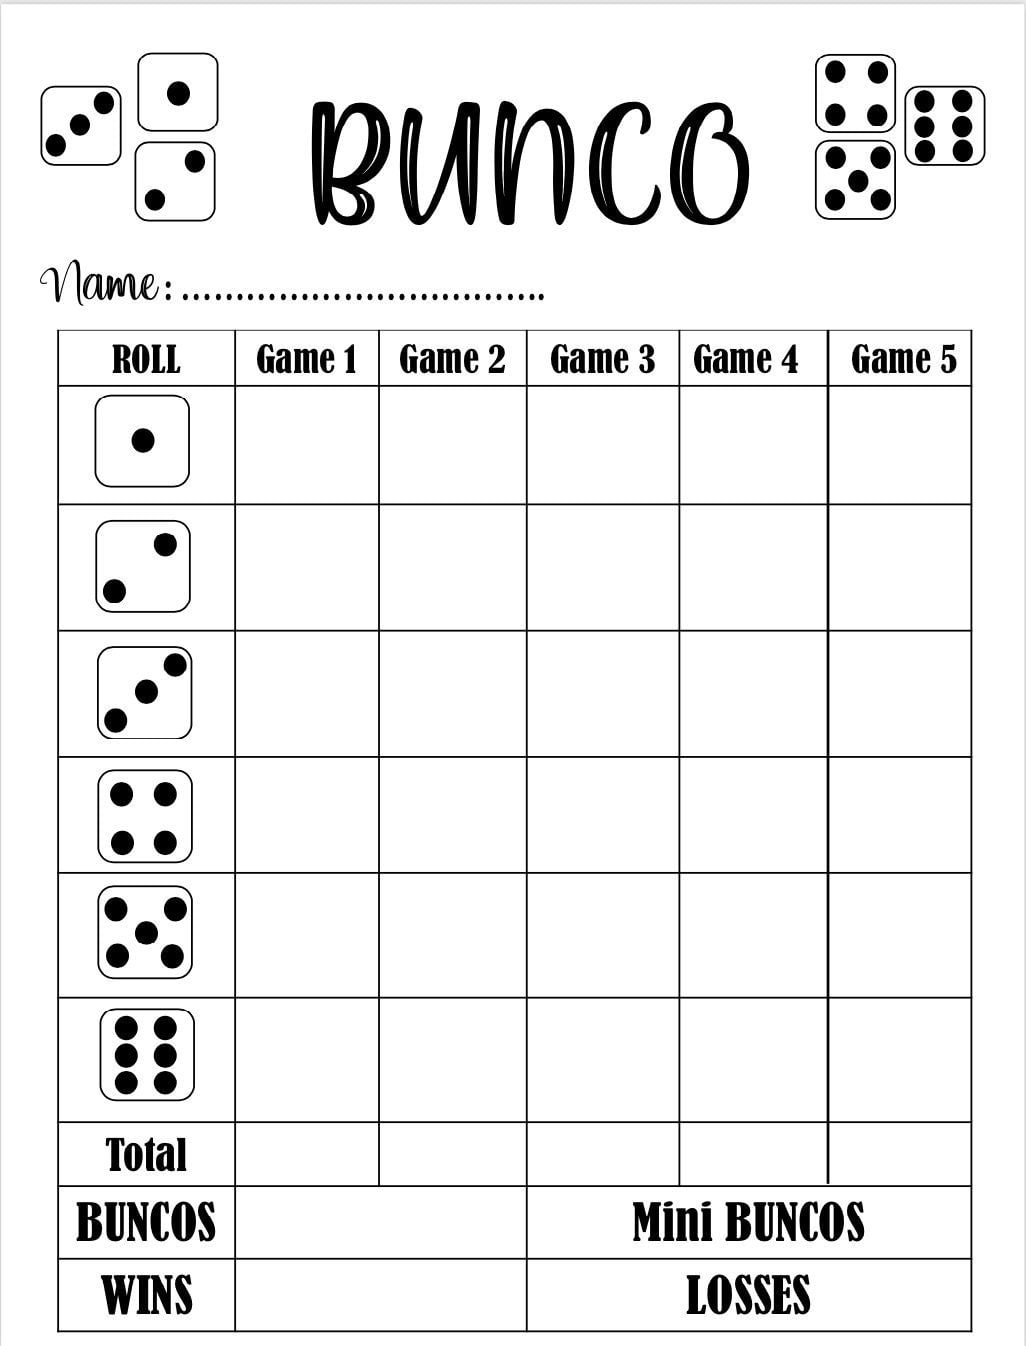 Bunco Score Sheets Free Printable